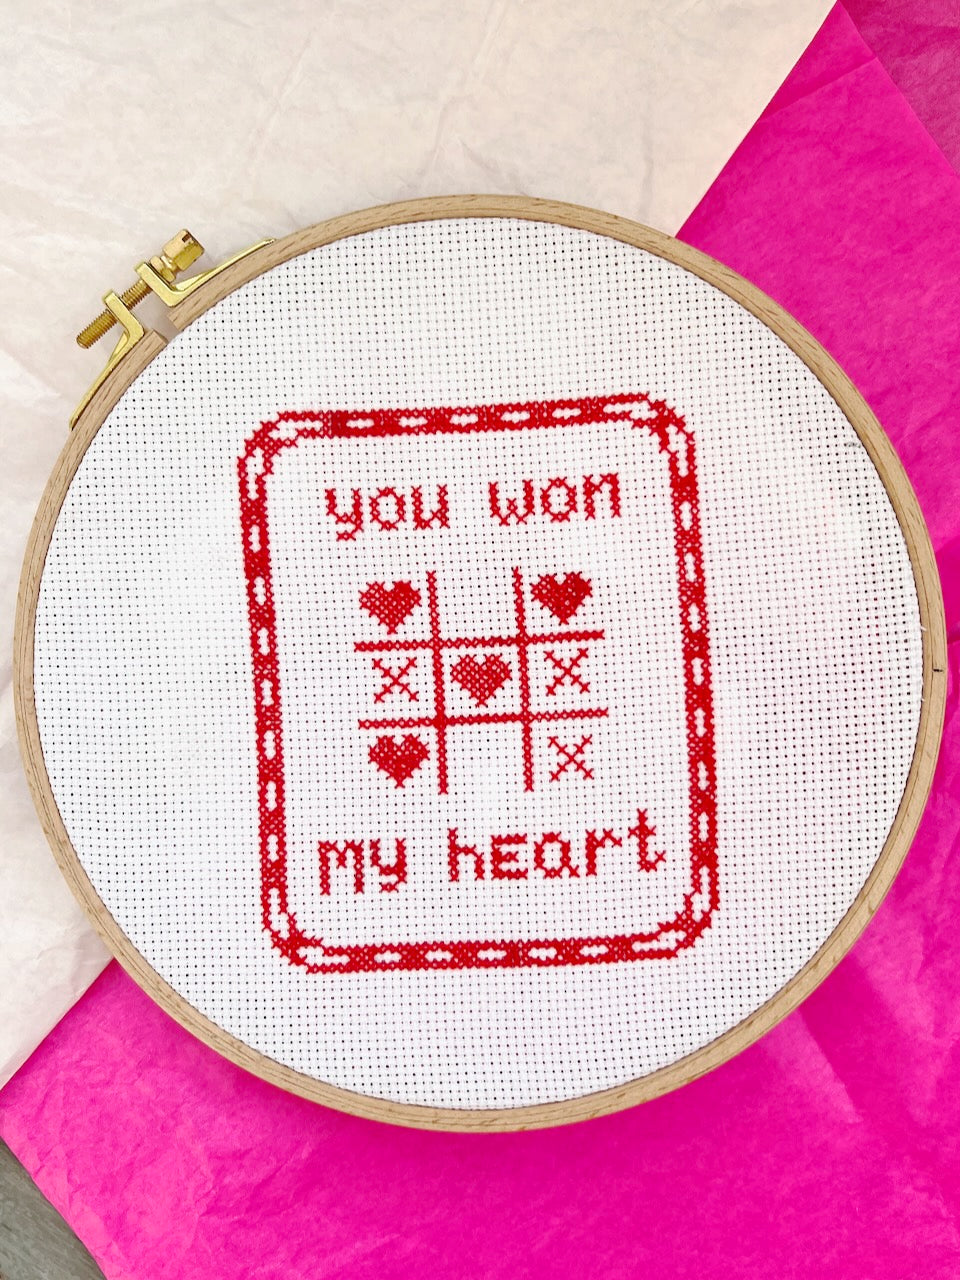 Game of love - cross stitch pattern